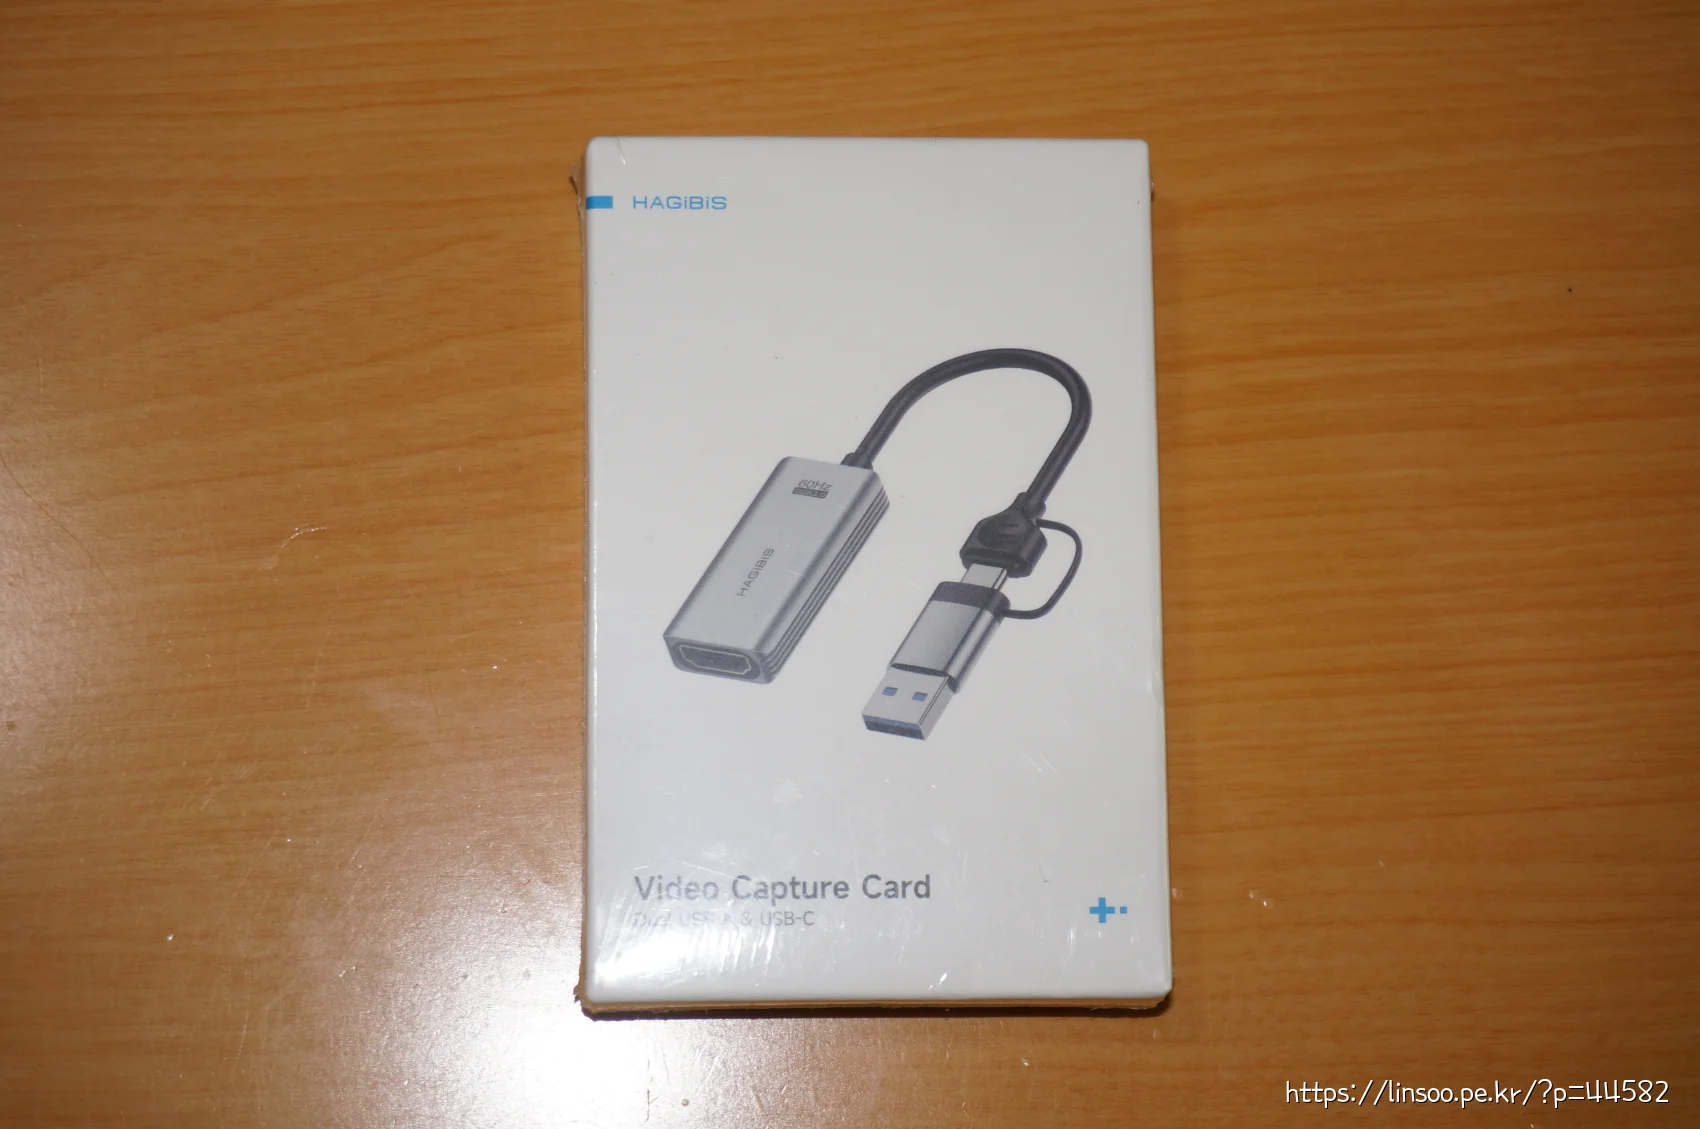 Hagibis USB 3.0 비디오 캡처 카드